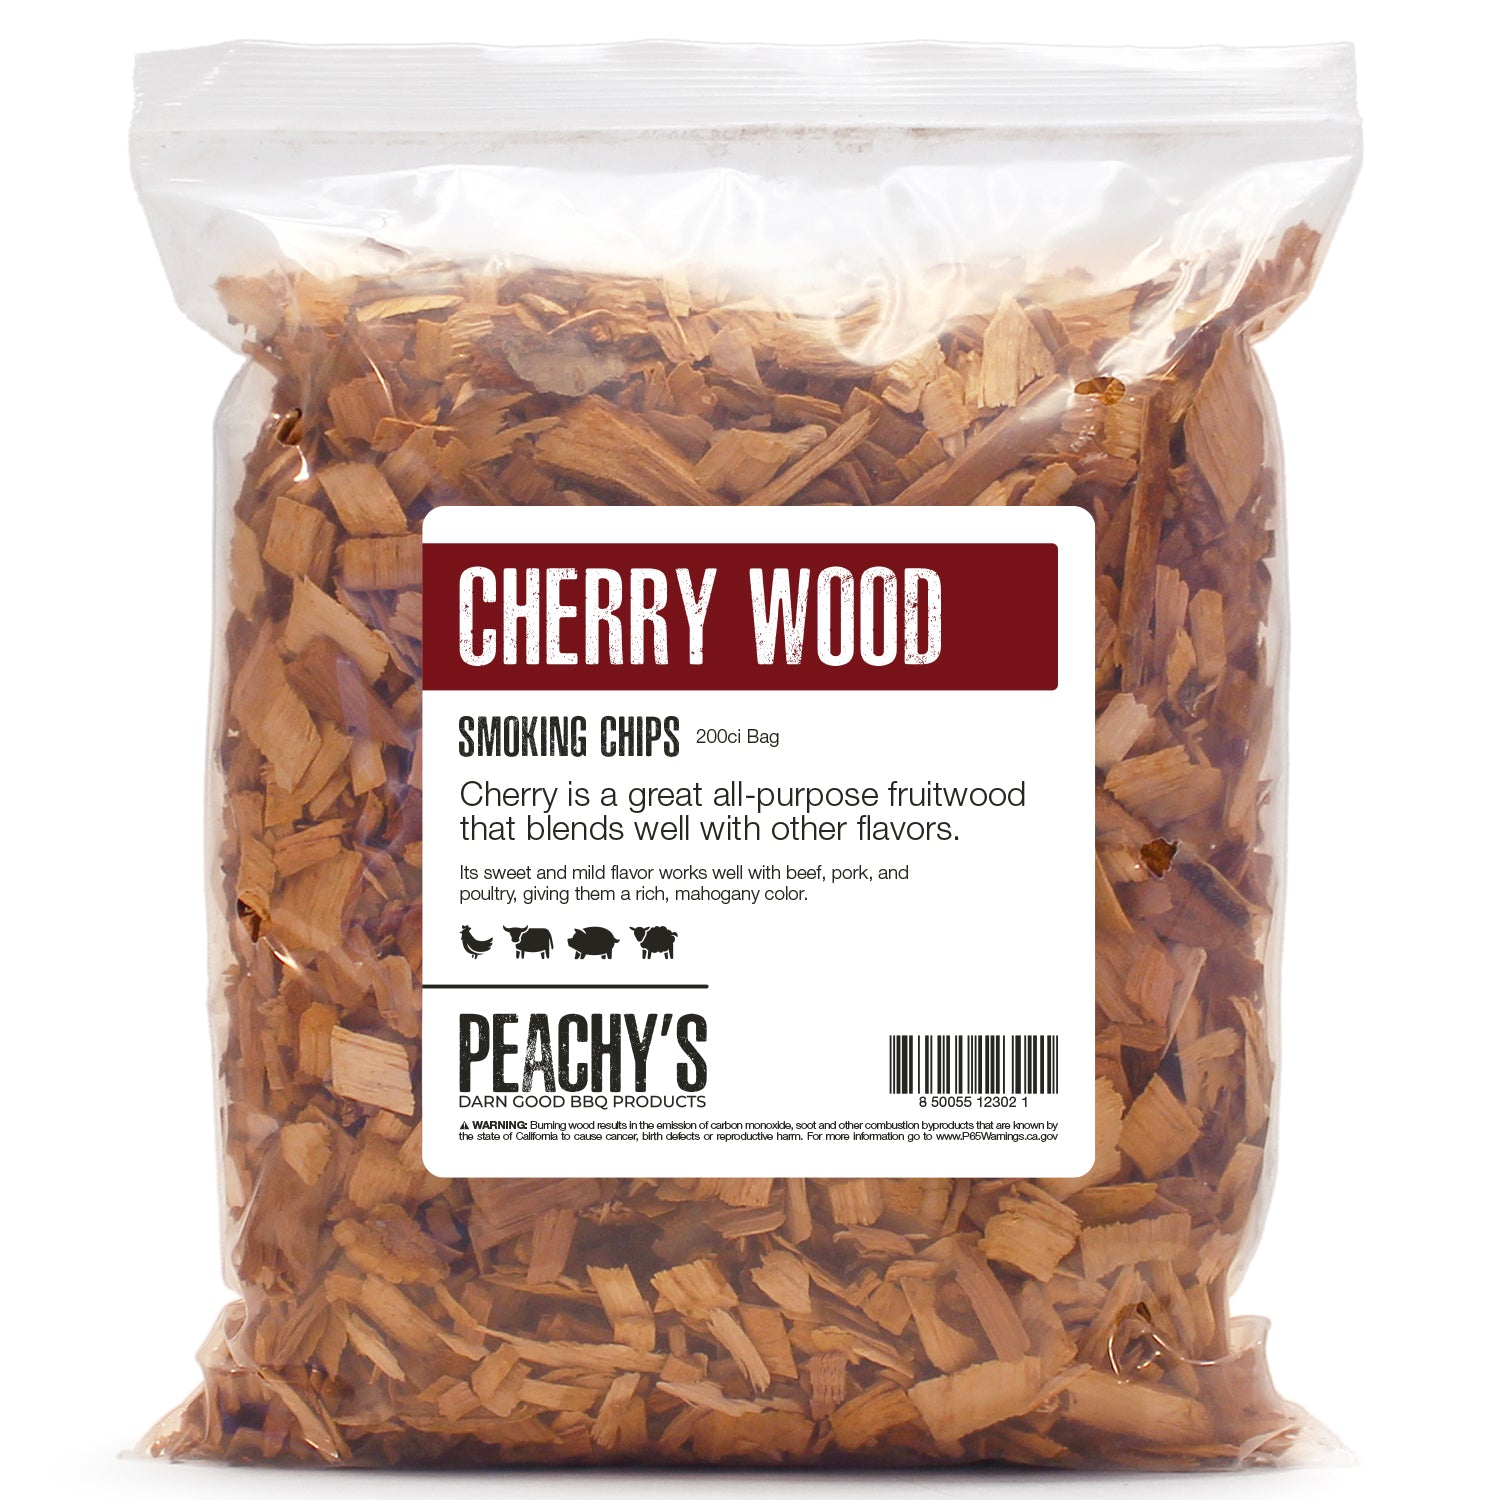 CHERRY Chips | 200ci Bag of Premium Smoking Woods by PEACHY'S